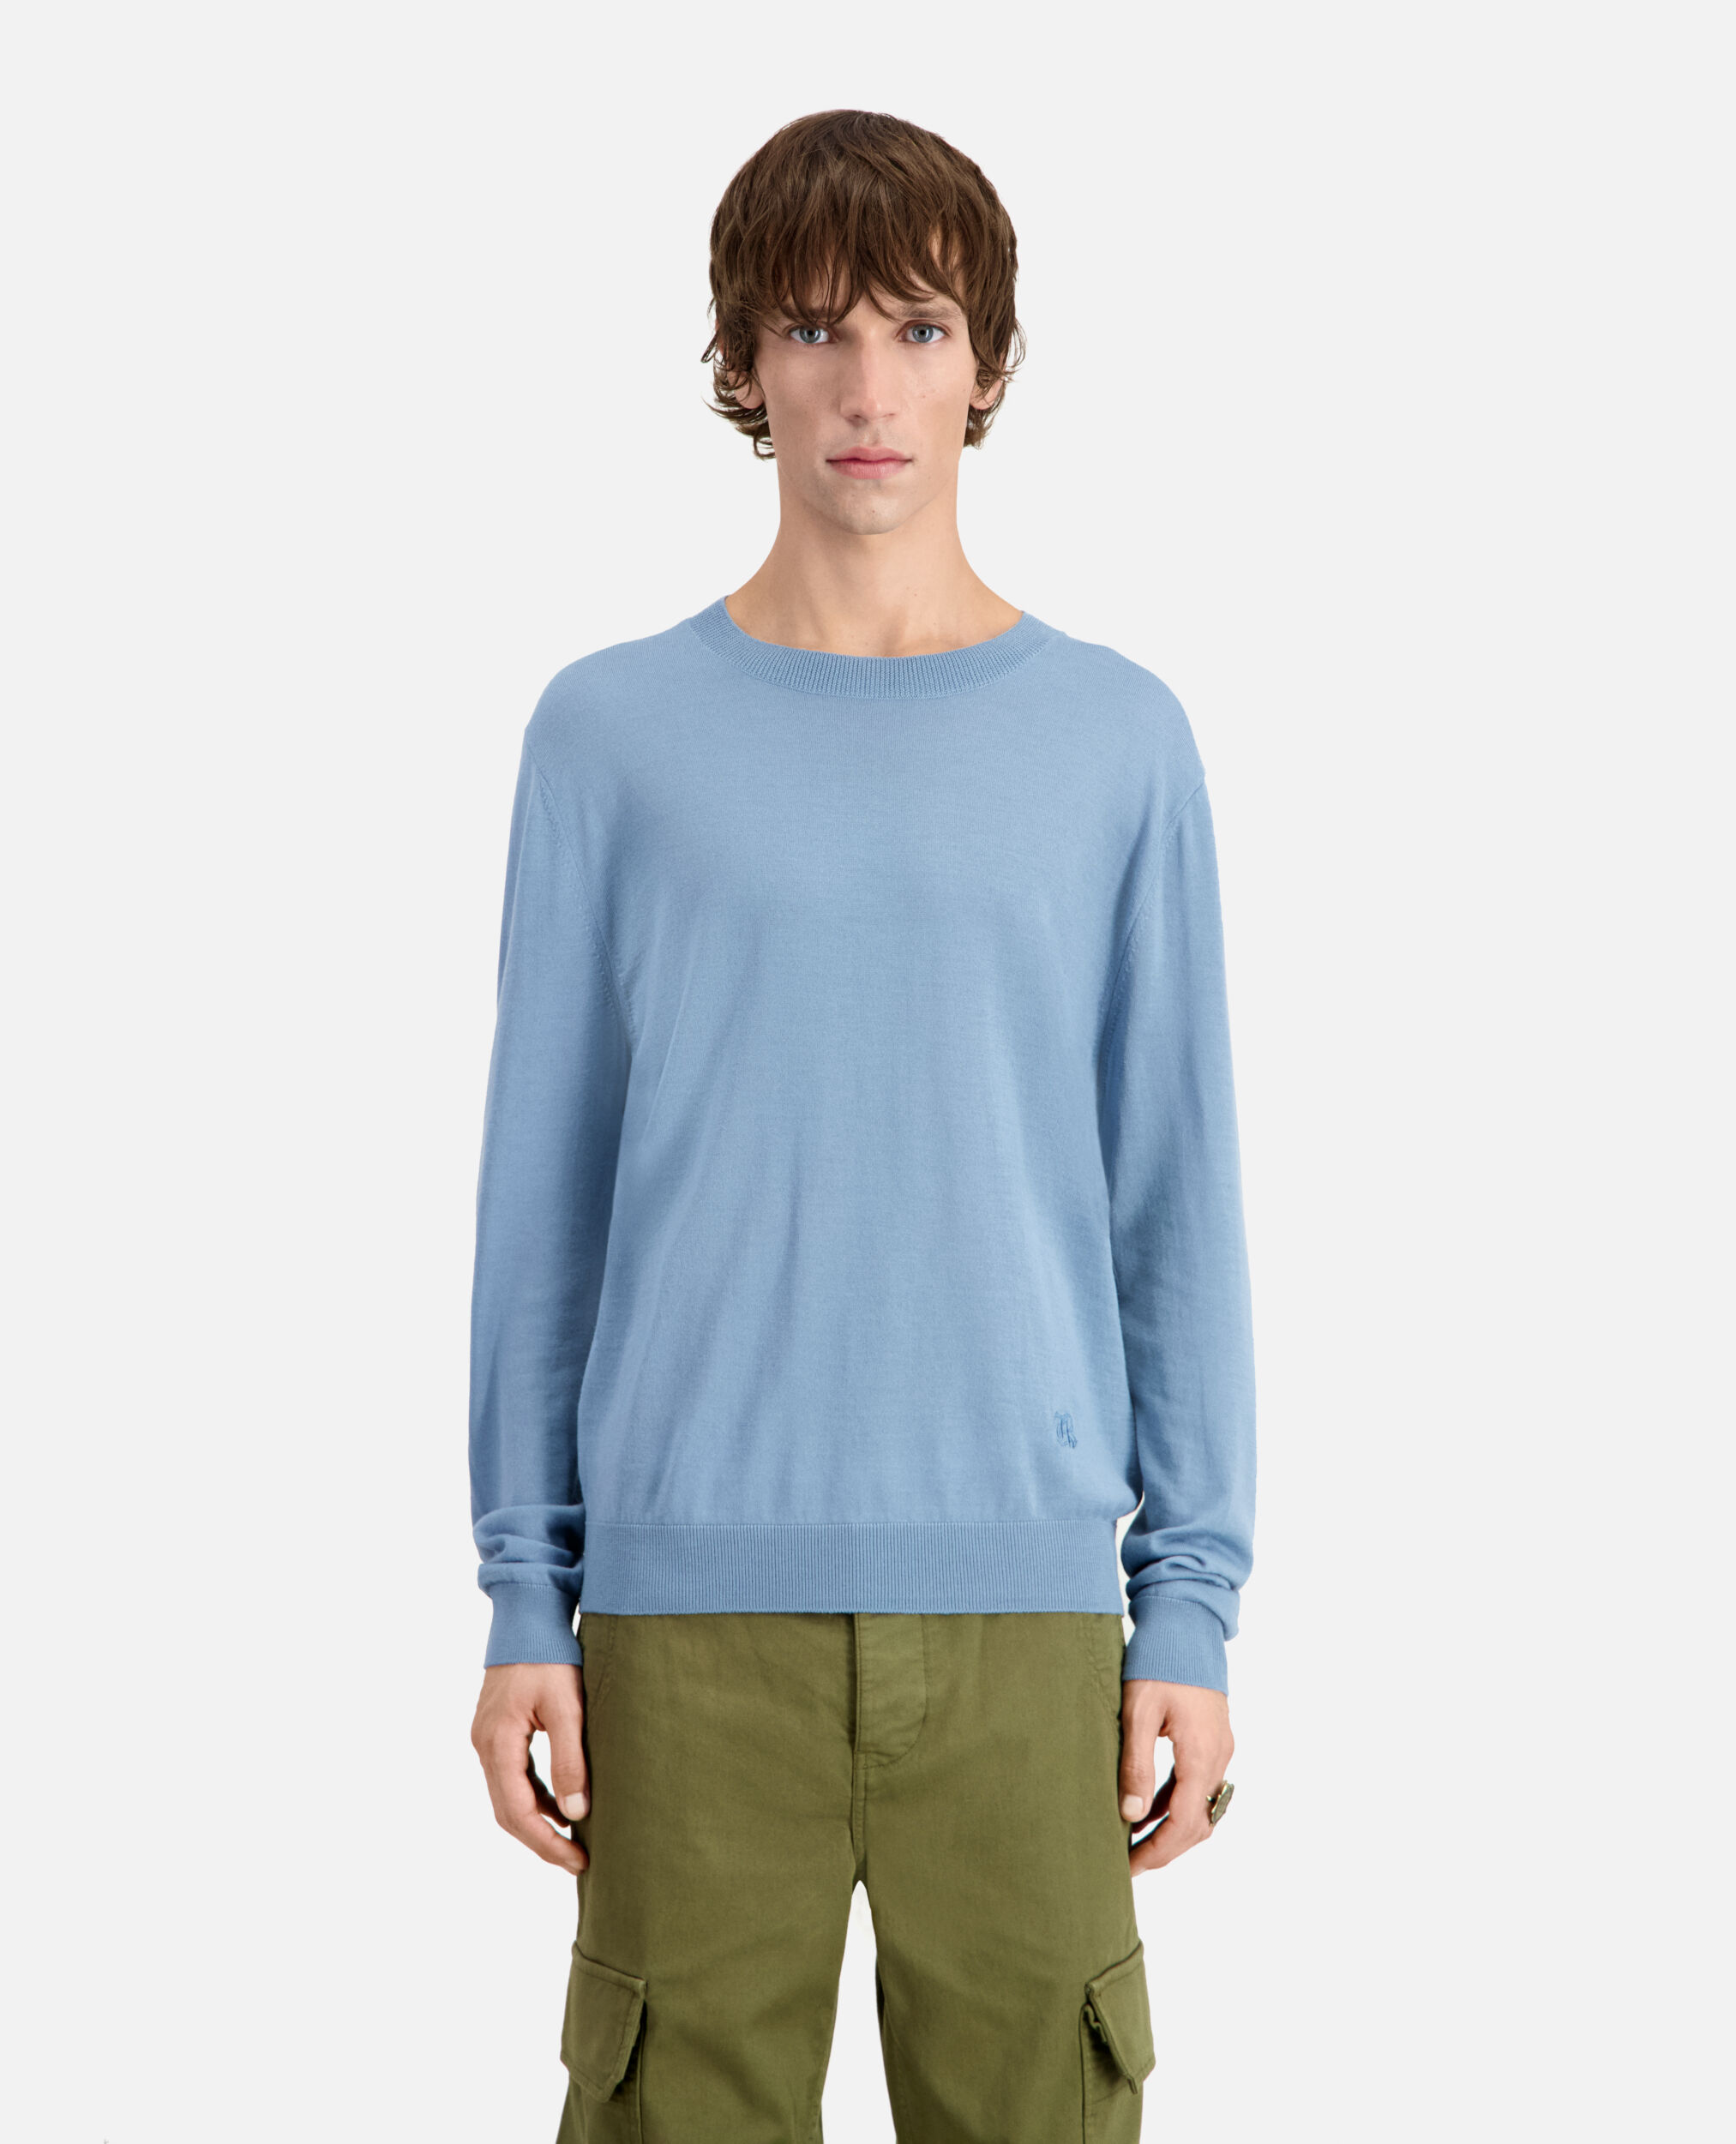 Blue merino wool sweater, BLUE GREY, hi-res image number null